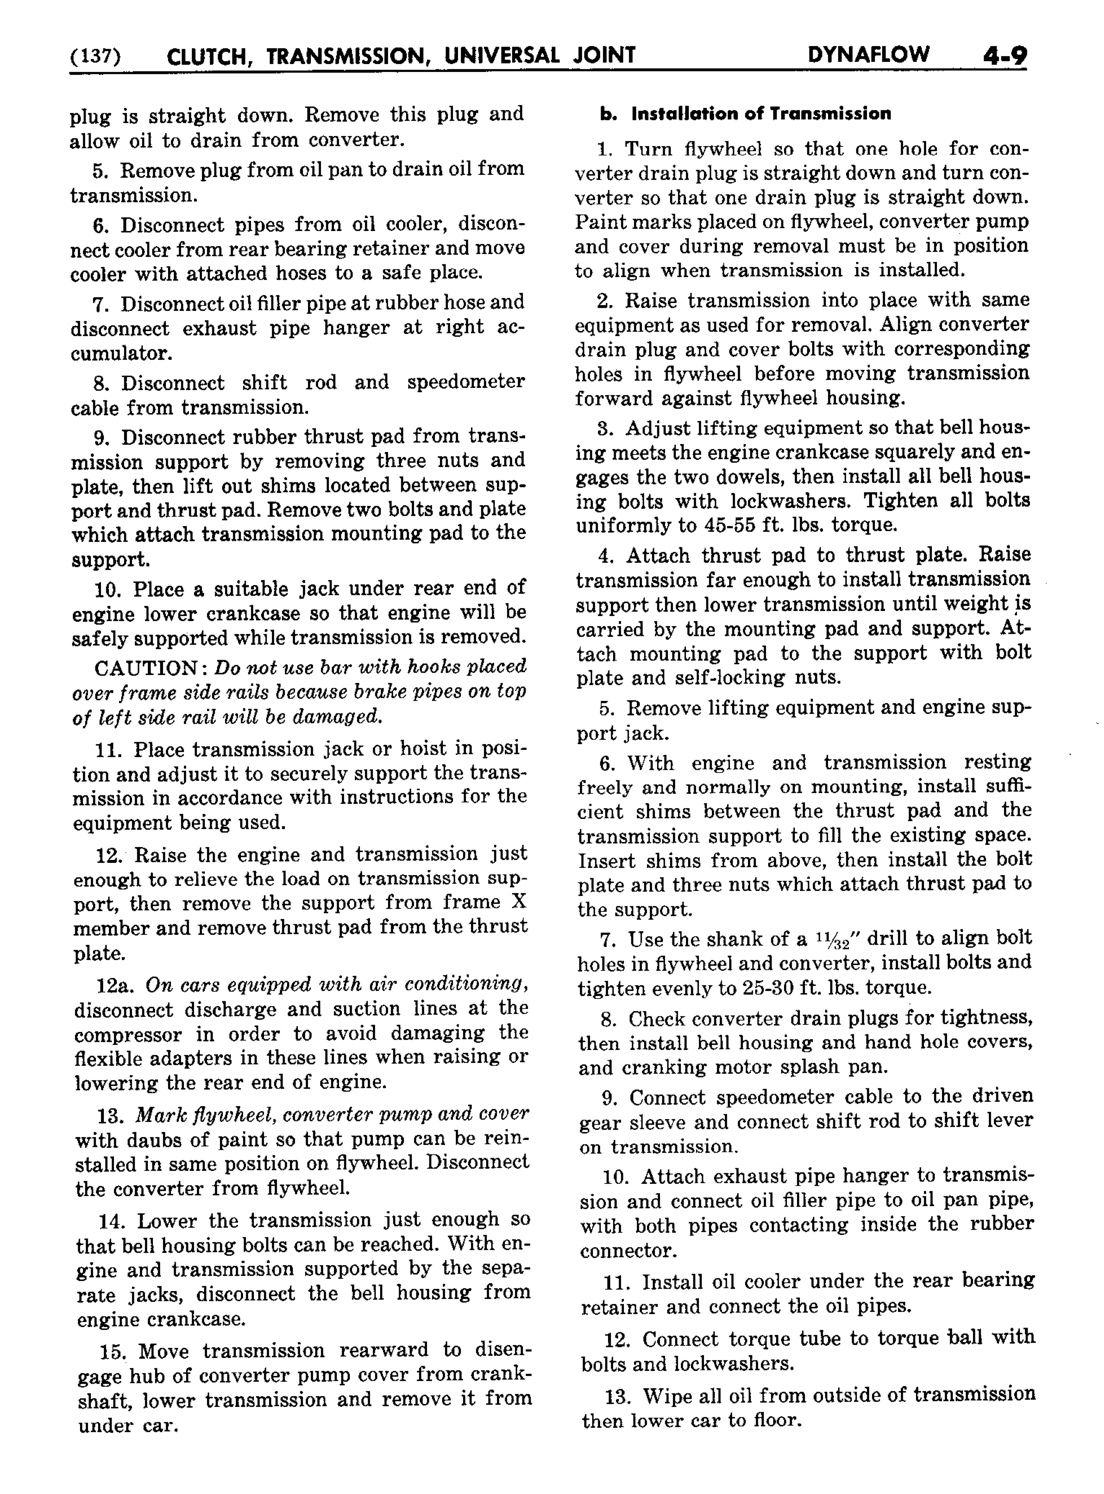 n_05 1953 Buick Shop Manual - Transmission-009-009.jpg